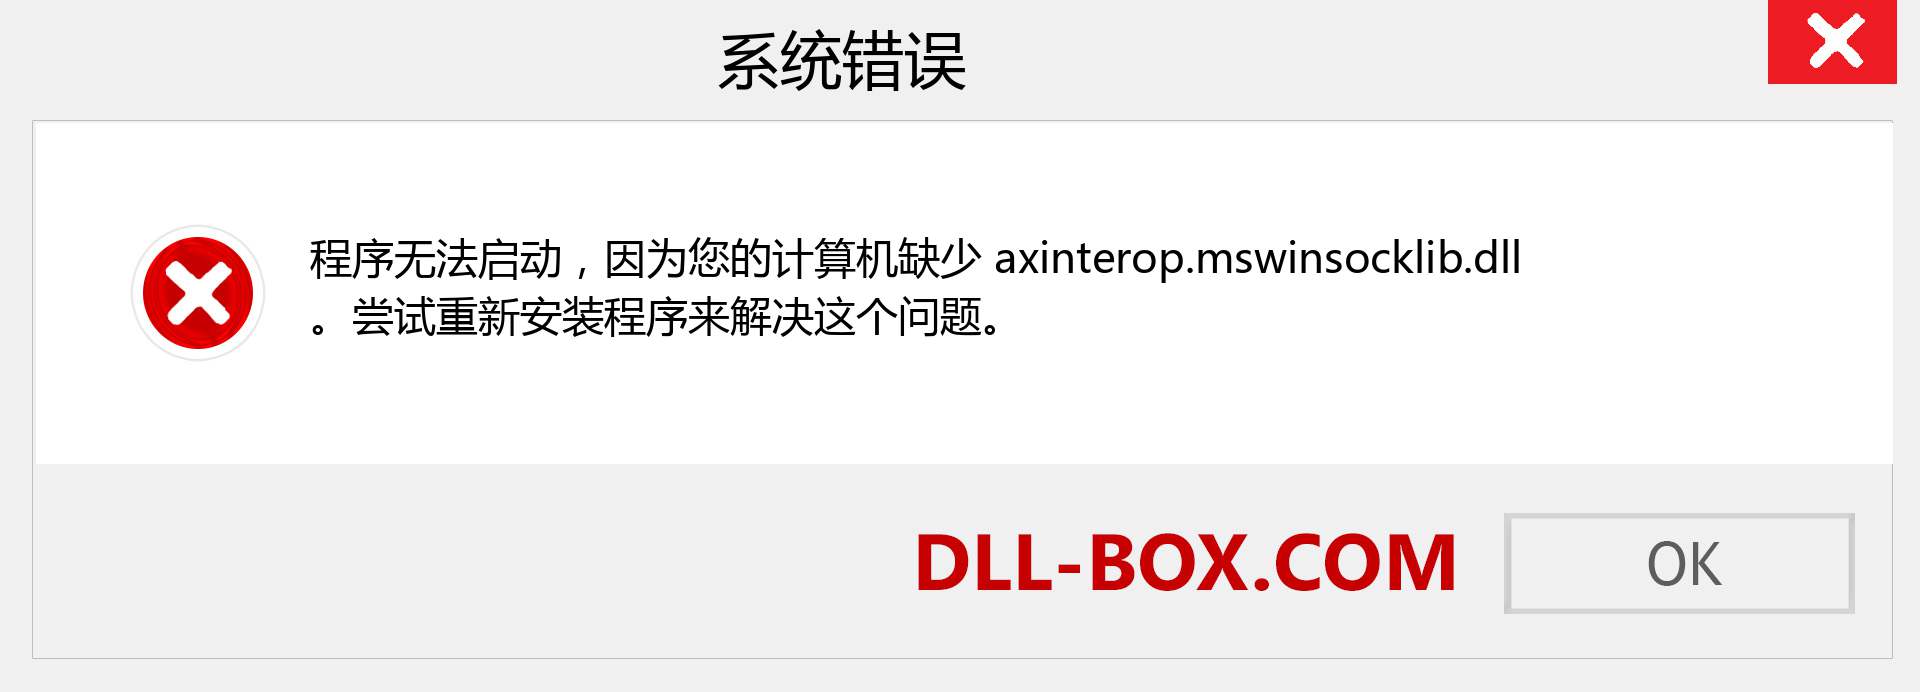 axinterop.mswinsocklib.dll 文件丢失？。 适用于 Windows 7、8、10 的下载 - 修复 Windows、照片、图像上的 axinterop.mswinsocklib dll 丢失错误